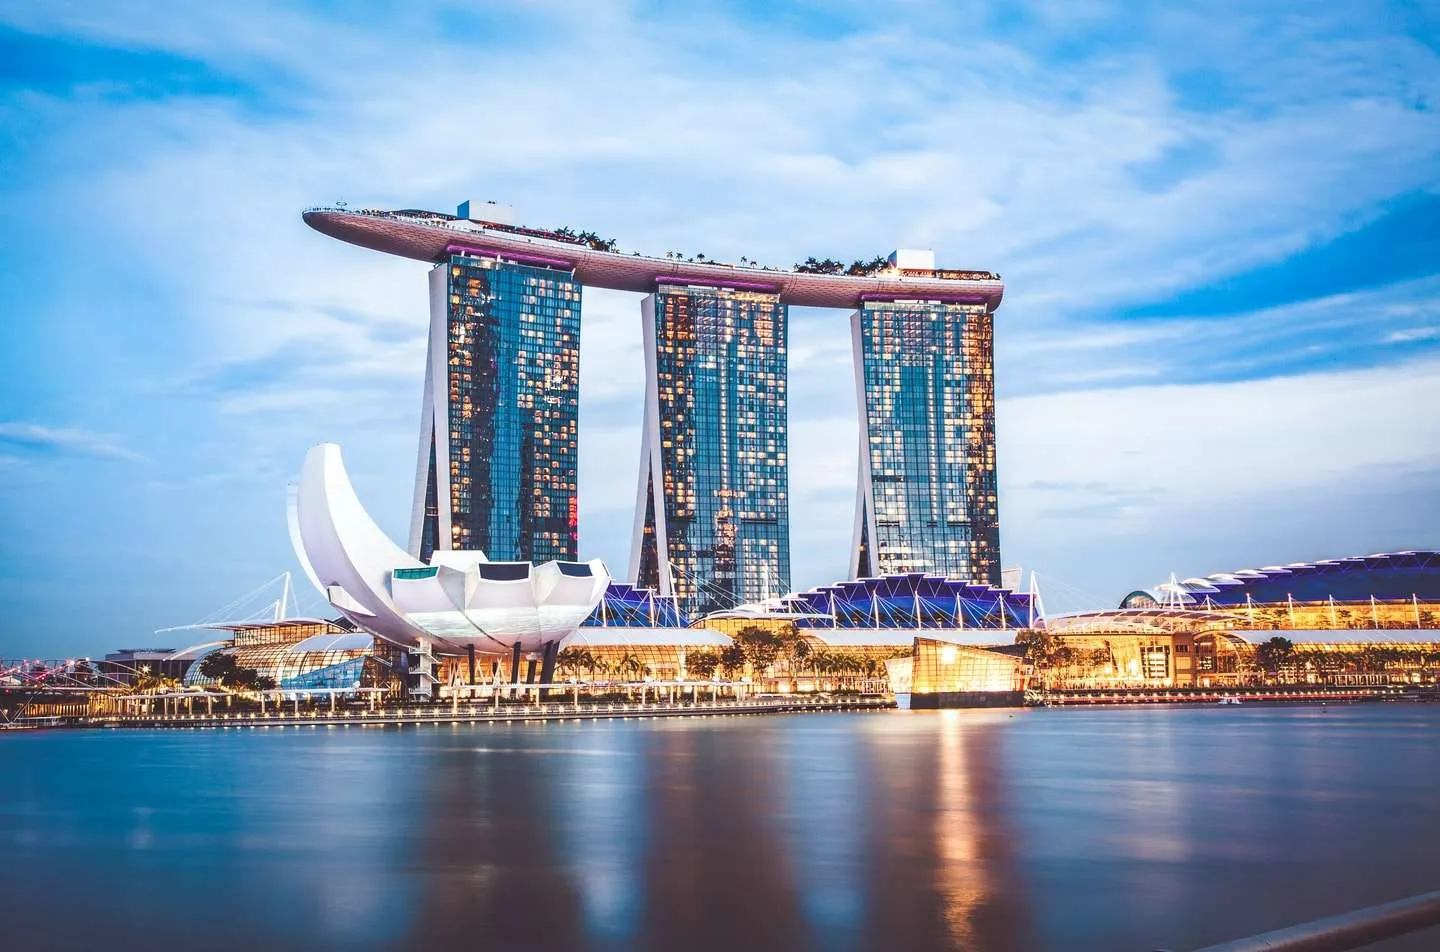 Marina Bay Sands - trung tâm sầm uất số 1 của Singapore